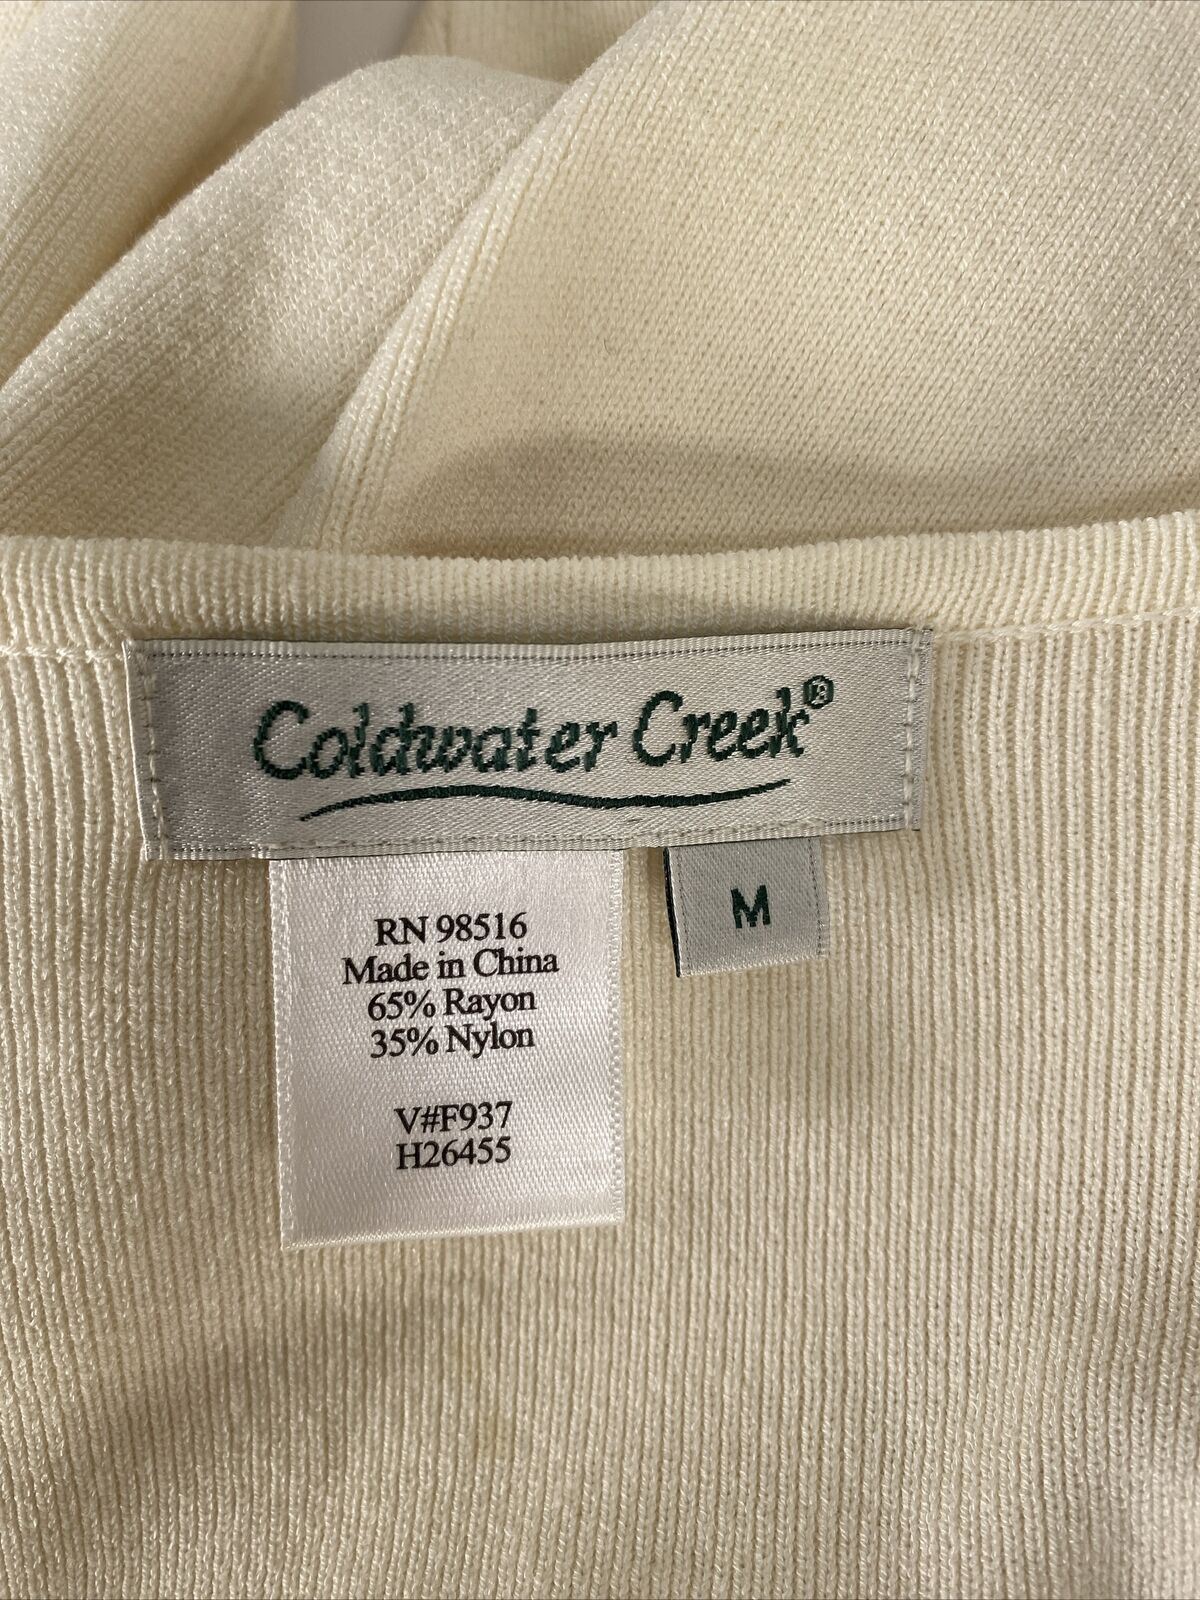 Coldwater Creek Women's Ivory Long Sleeve Cardigan Sweater - M